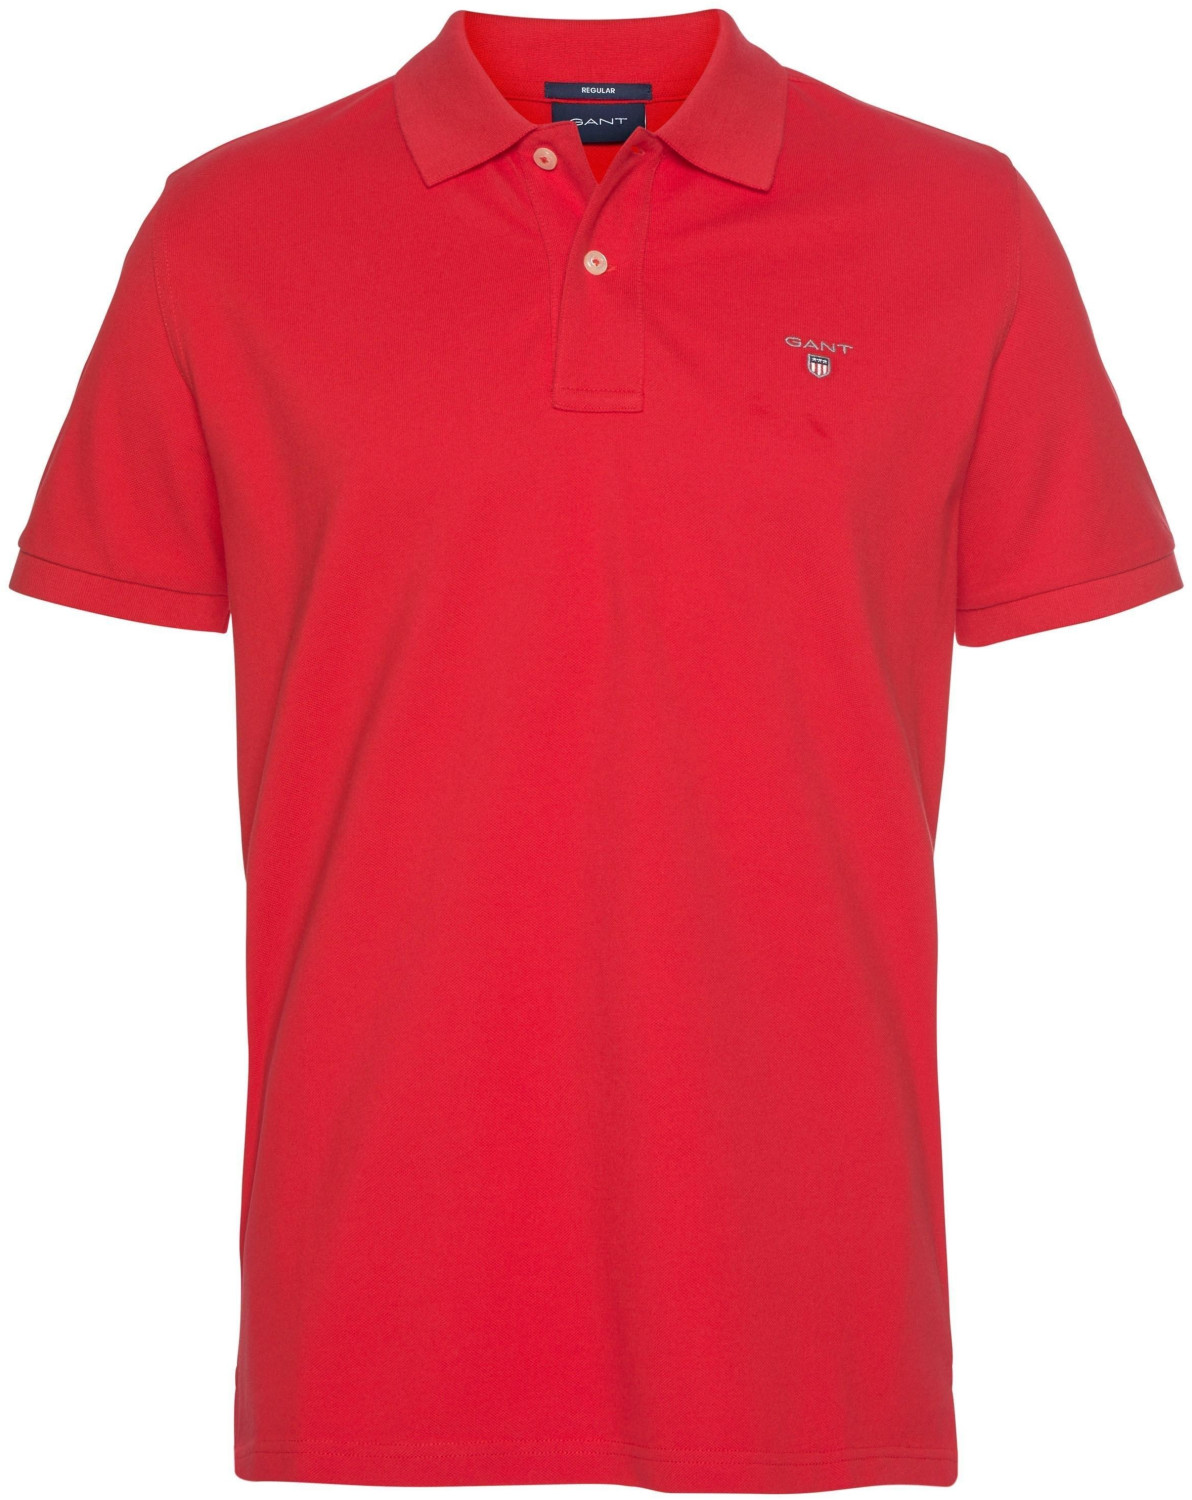 € Piqué | (2201) Shirt bright bei 51,95 ab Polo Bestseller GANT red Preisvergleich